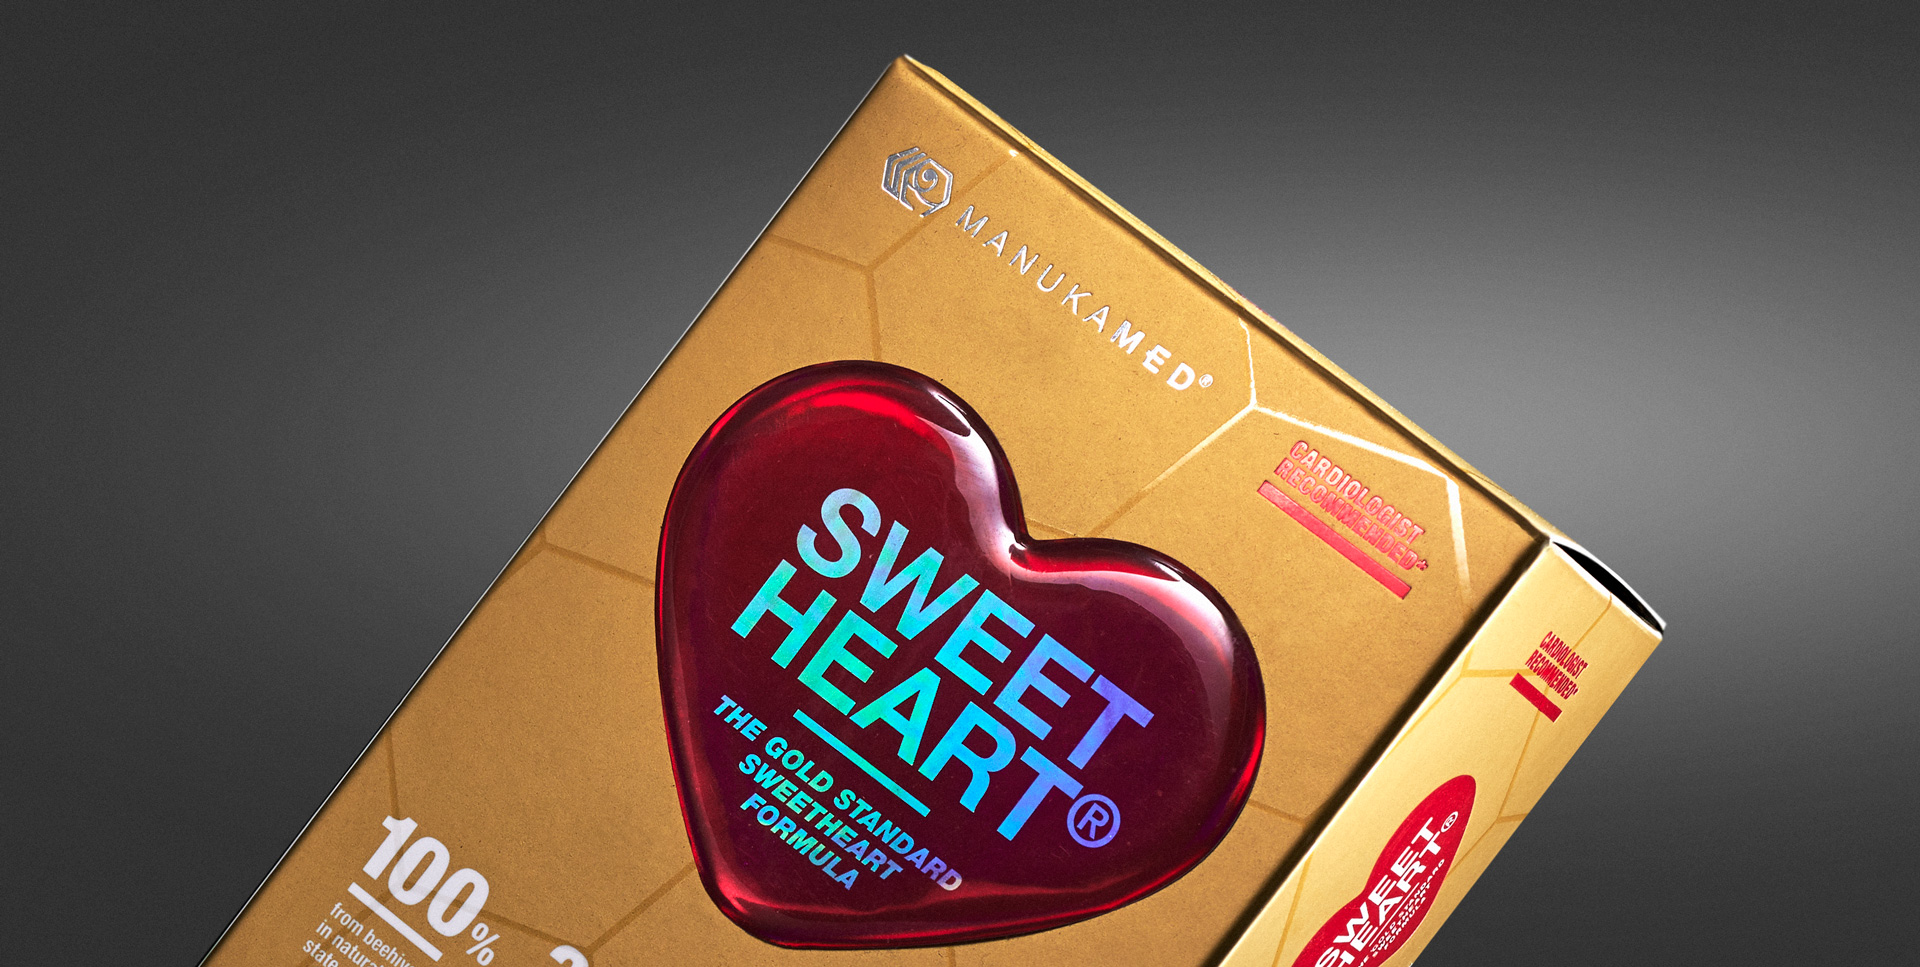 Robertstown-Sweetheart-Cholesterol-Lowering-Manuka-Honey-PF